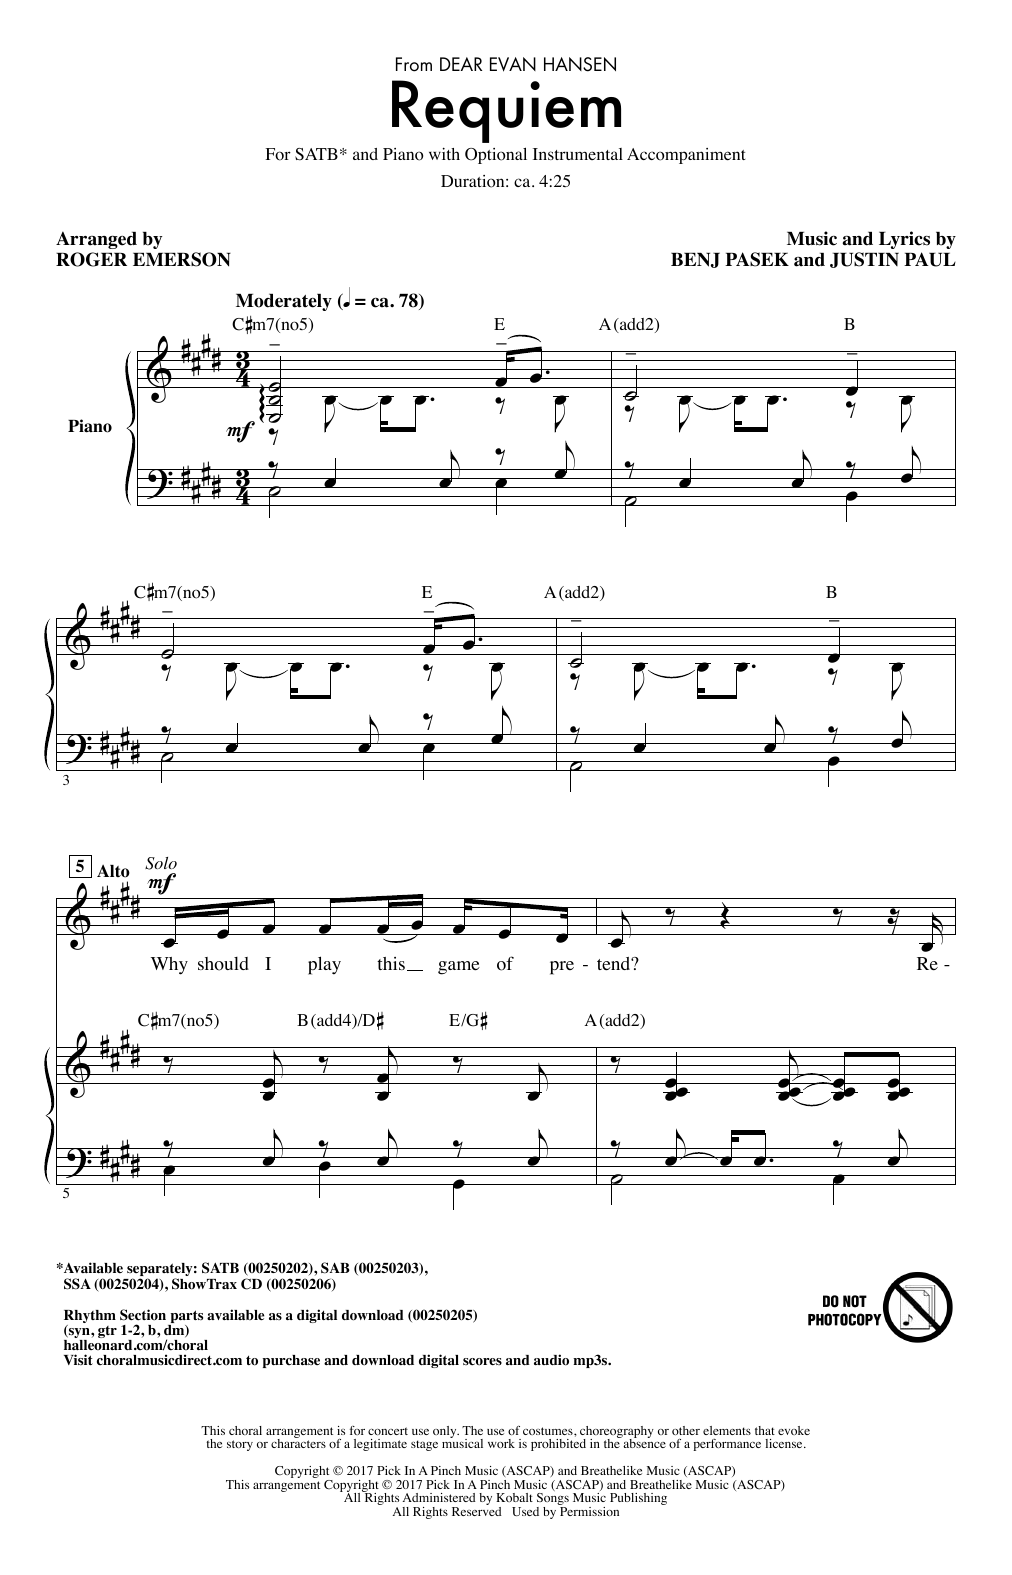 Pasek & Paul Requiem (from Dear Evan Hansen) (arr. Roger Emerson) Sheet Music Notes & Chords for SSA - Download or Print PDF